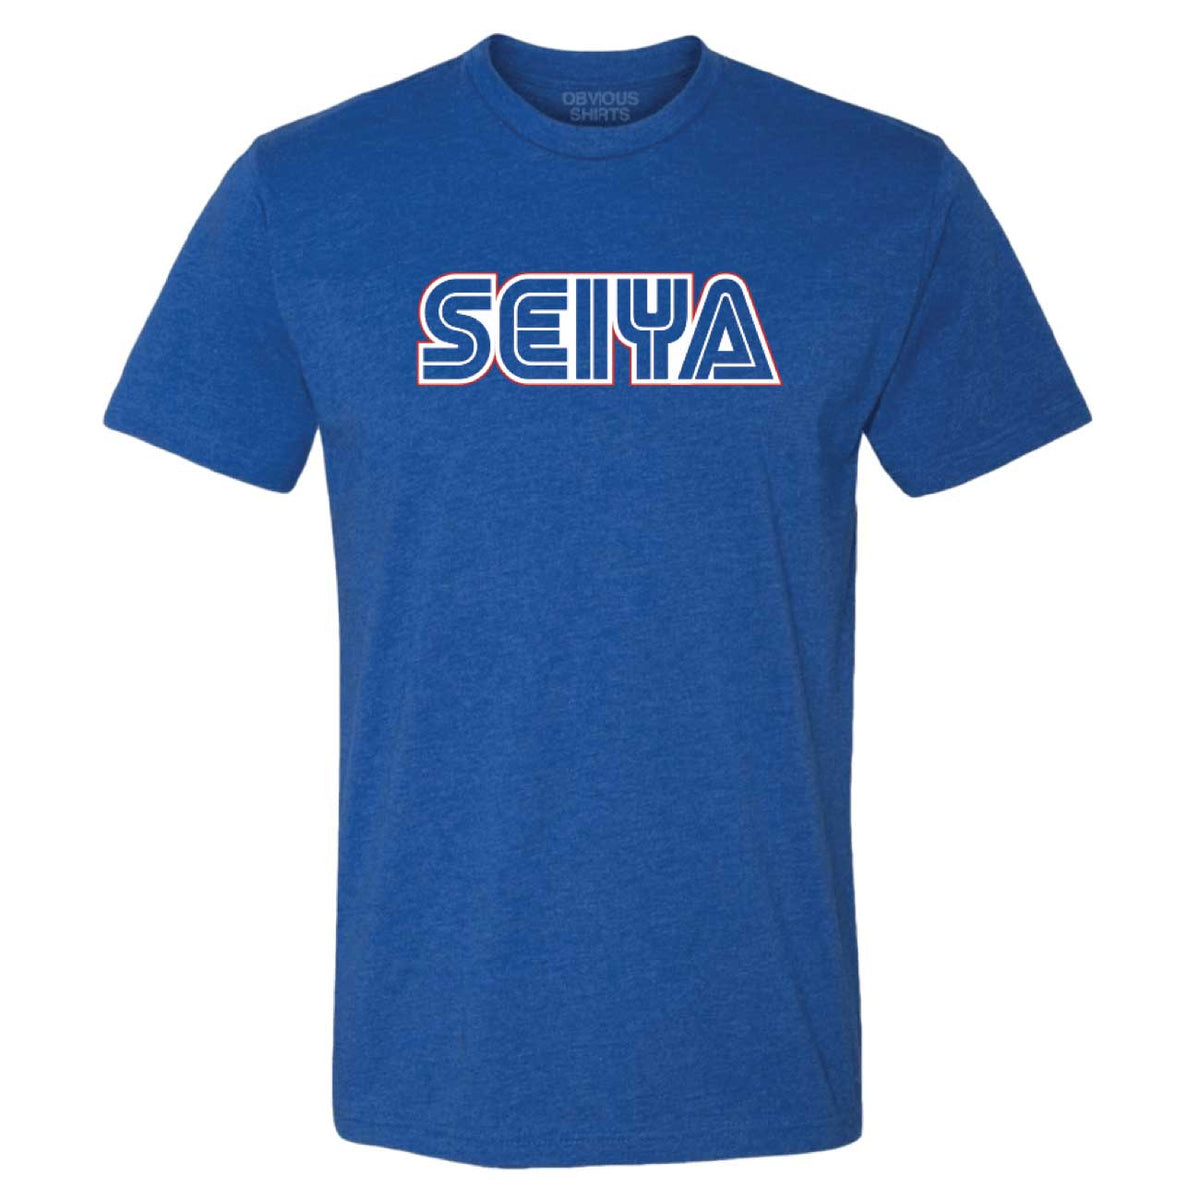 Seiya Suzuki Chicago Cubs Women's Navy Name and Number Banner Wave V-Neck T- Shirt 